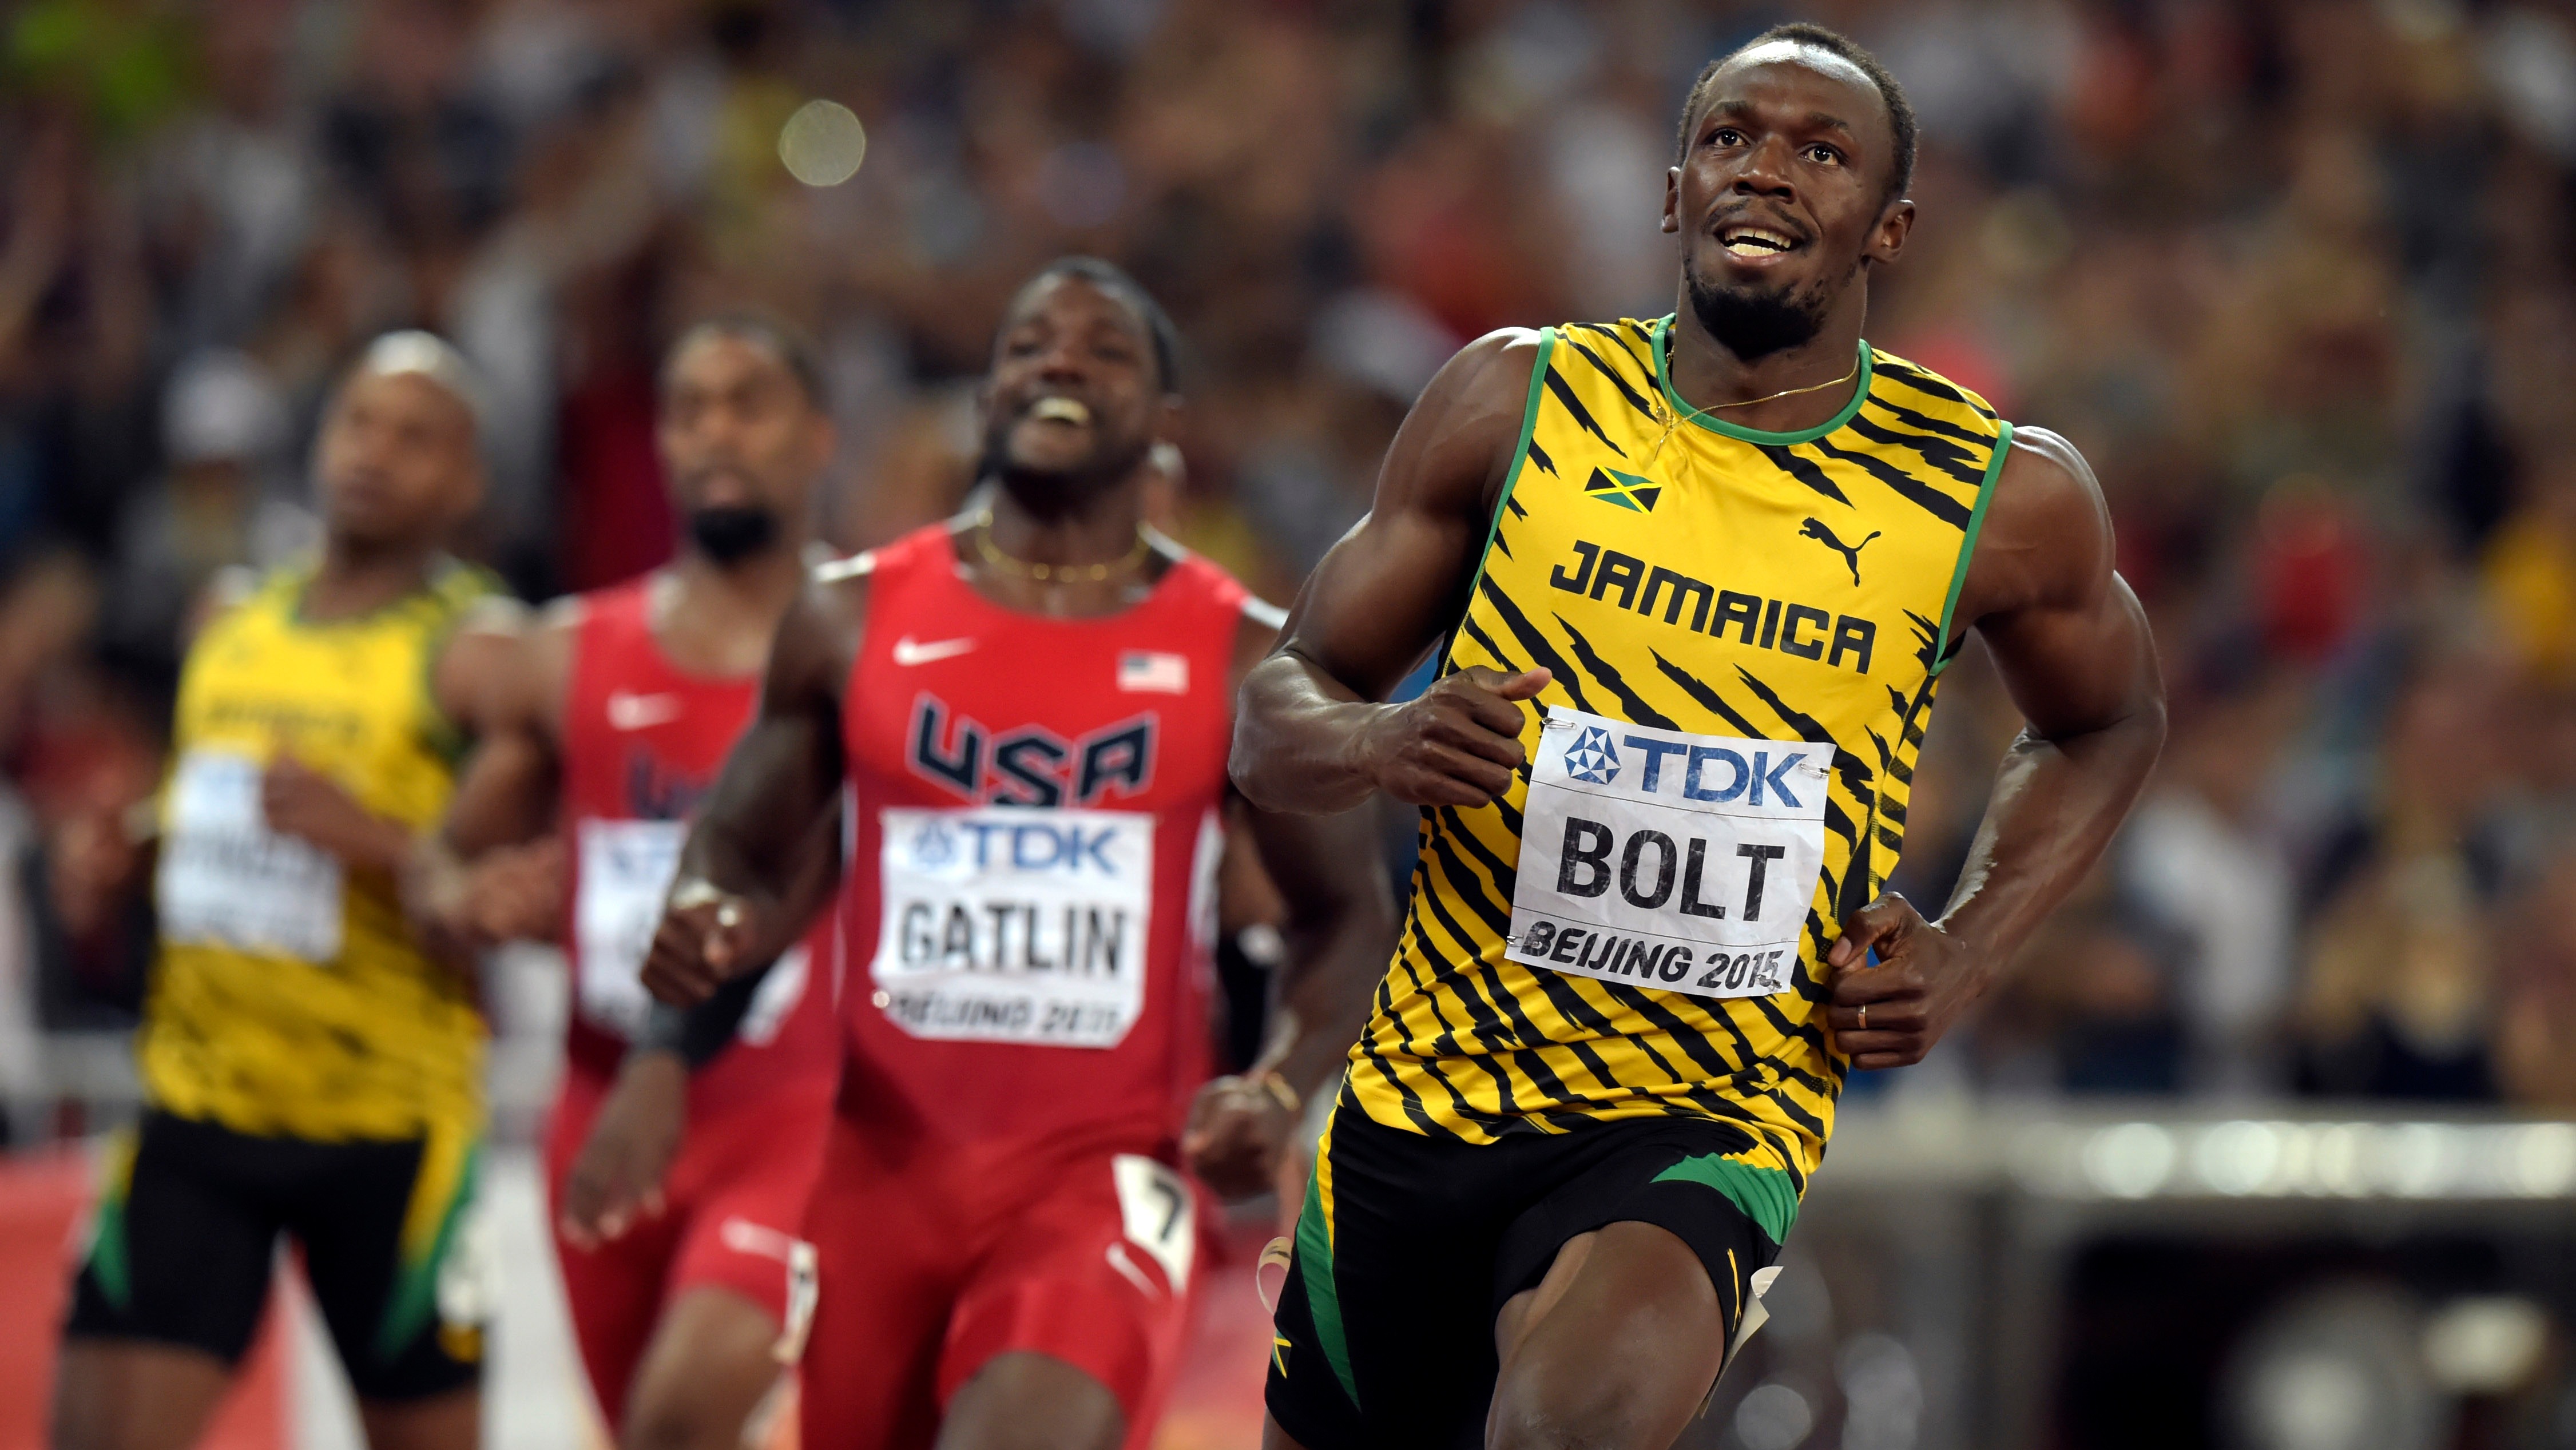 Usain Bolt World Championships 100m win was 'hardest race' of career